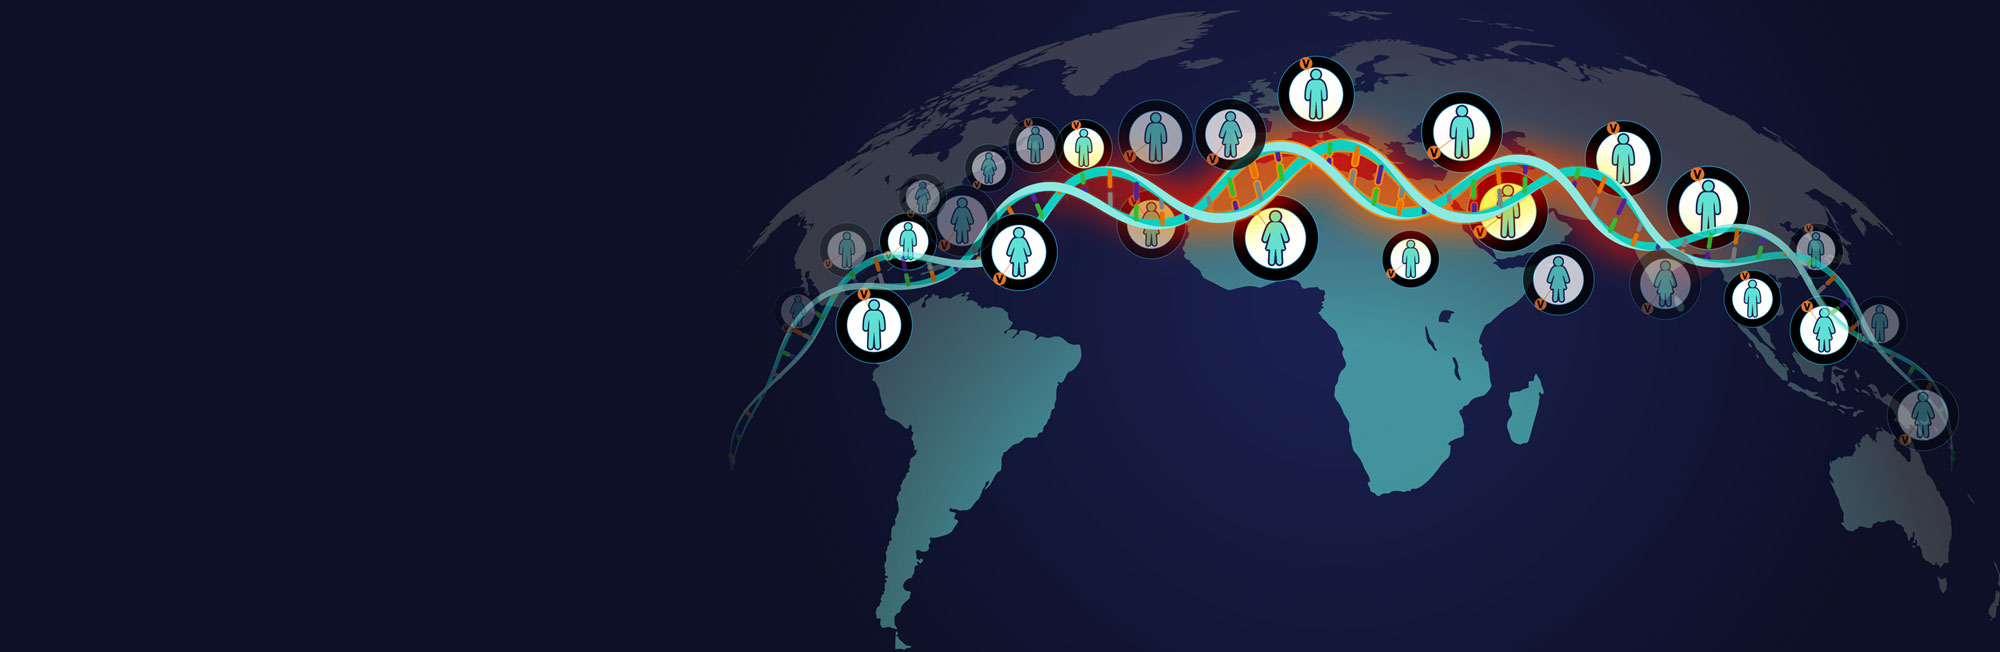 DNA strand spanning the globe